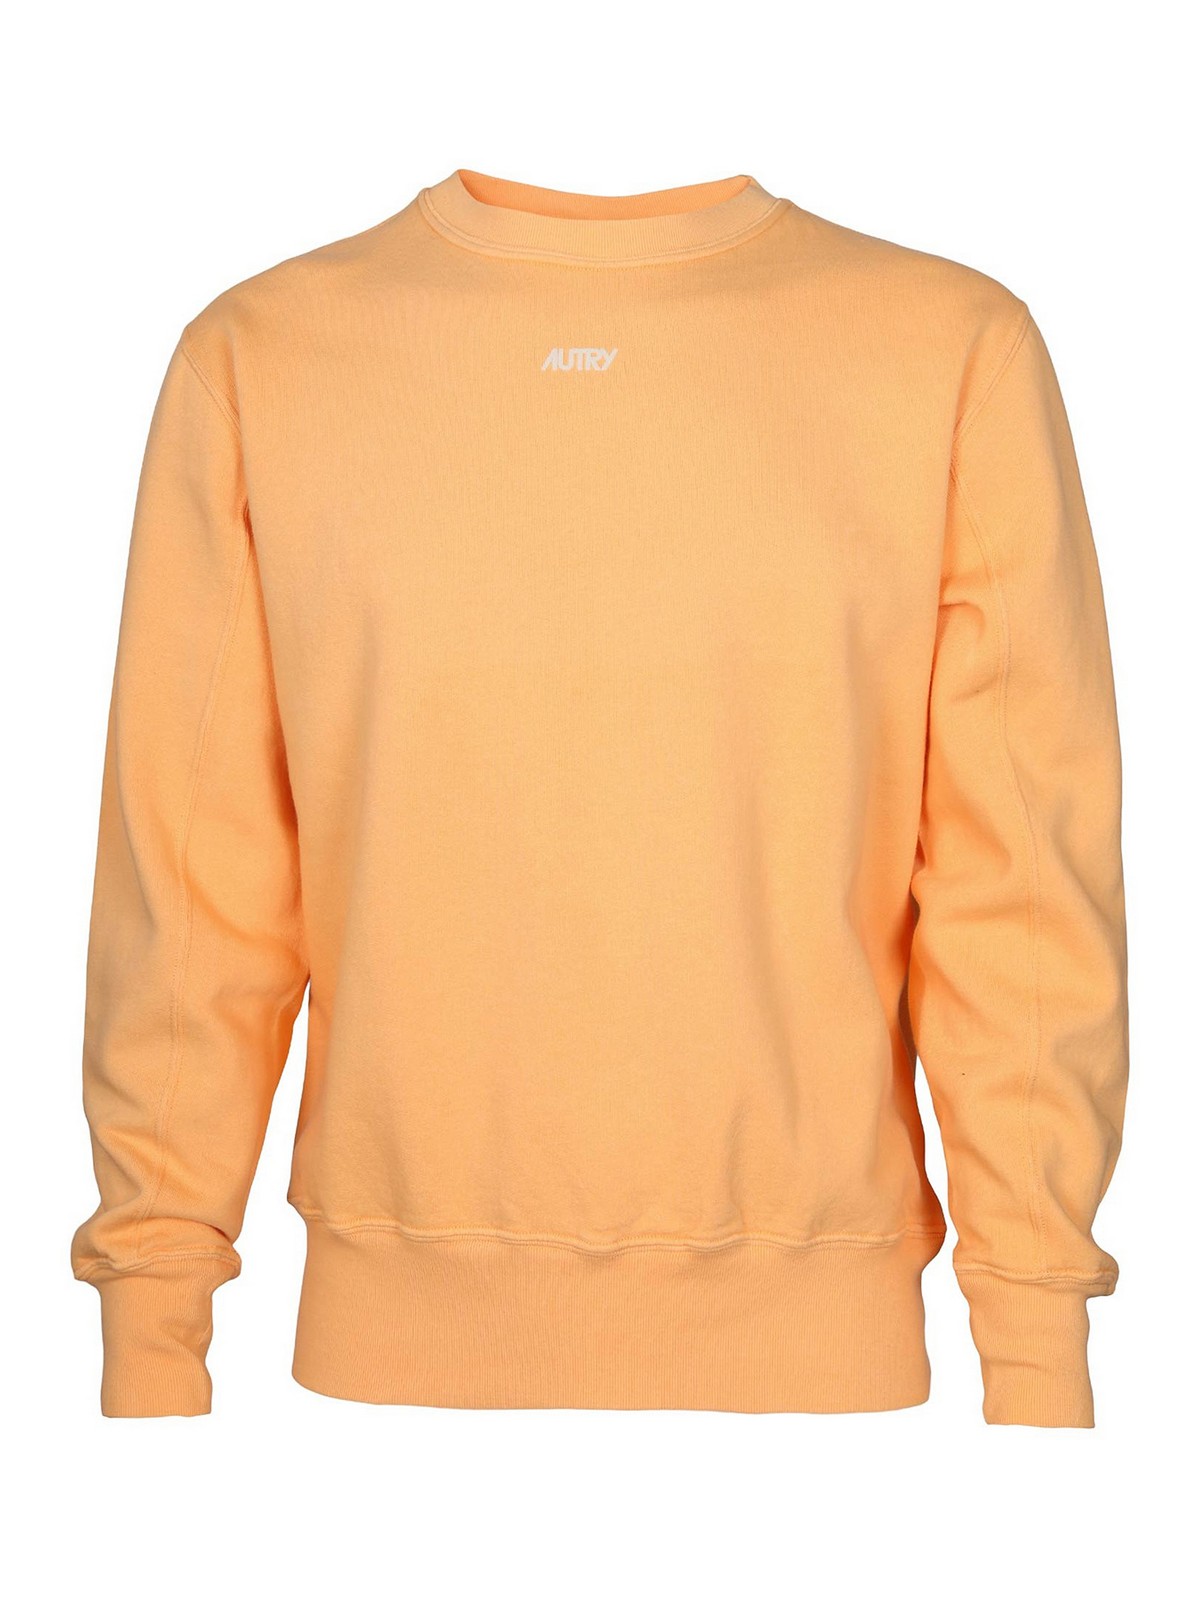 Autry Orange Cotton Sweatshirt